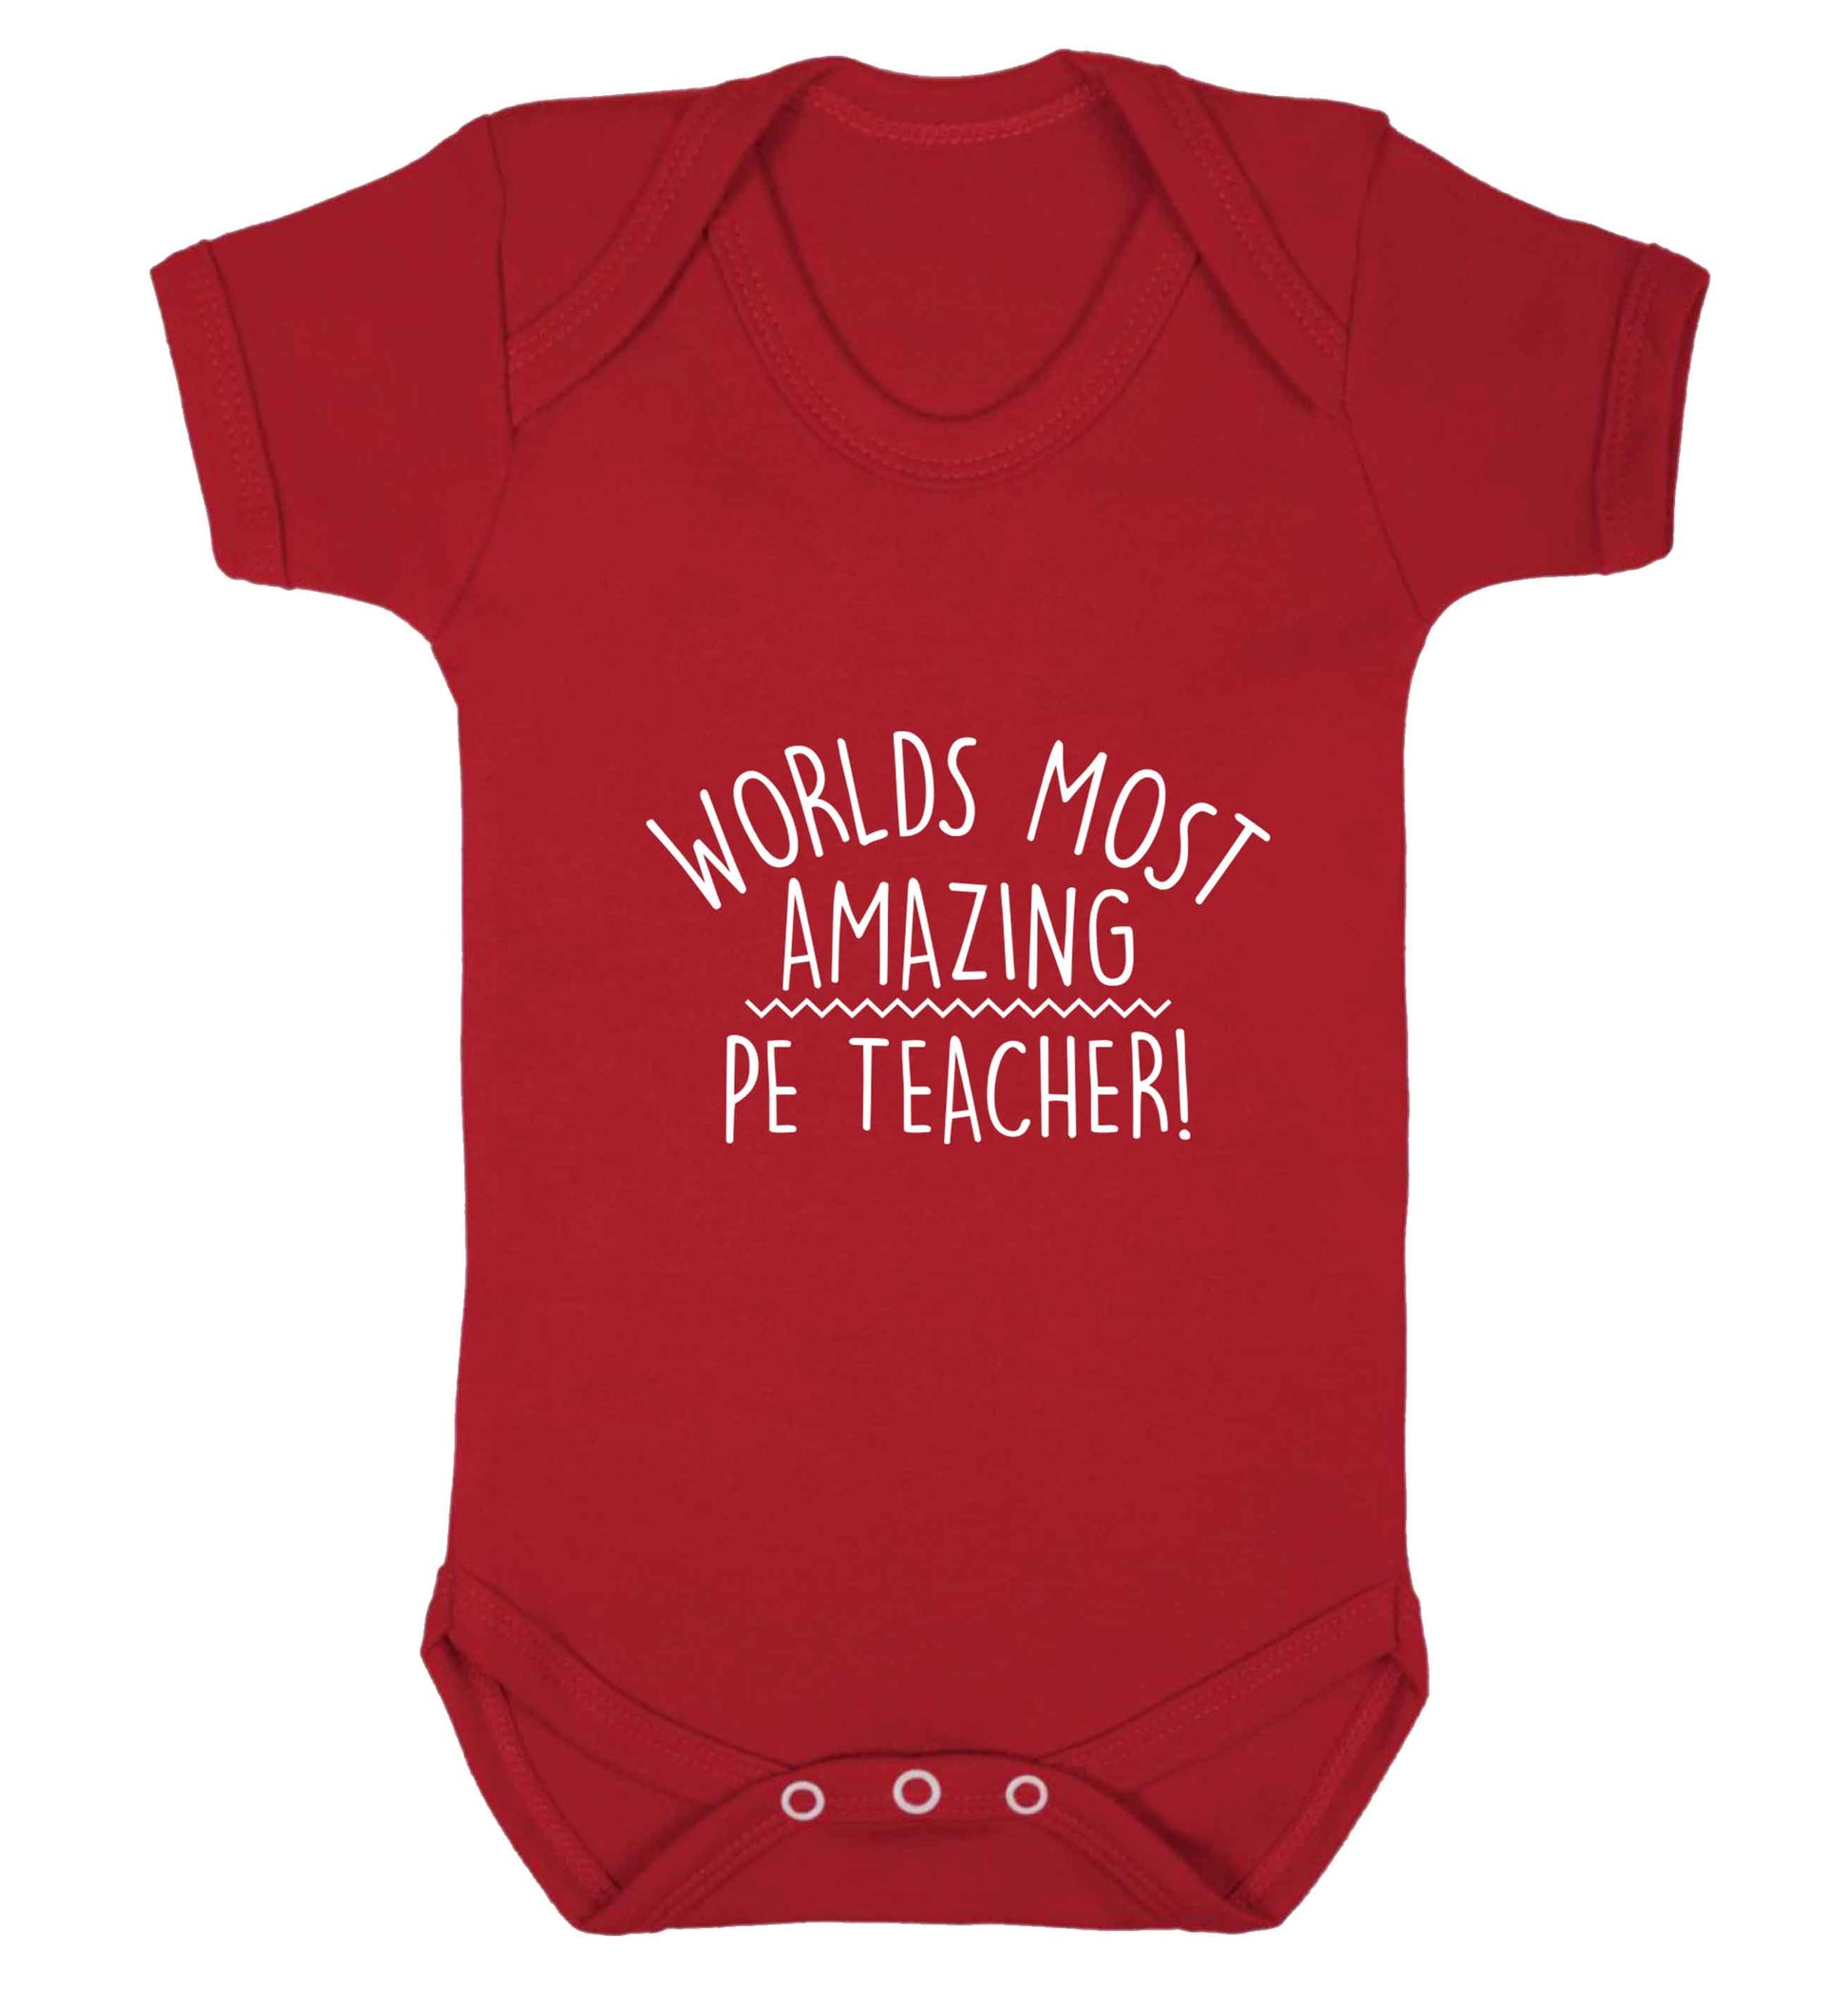 Worlds most amazing PE teacher baby vest red 18-24 months